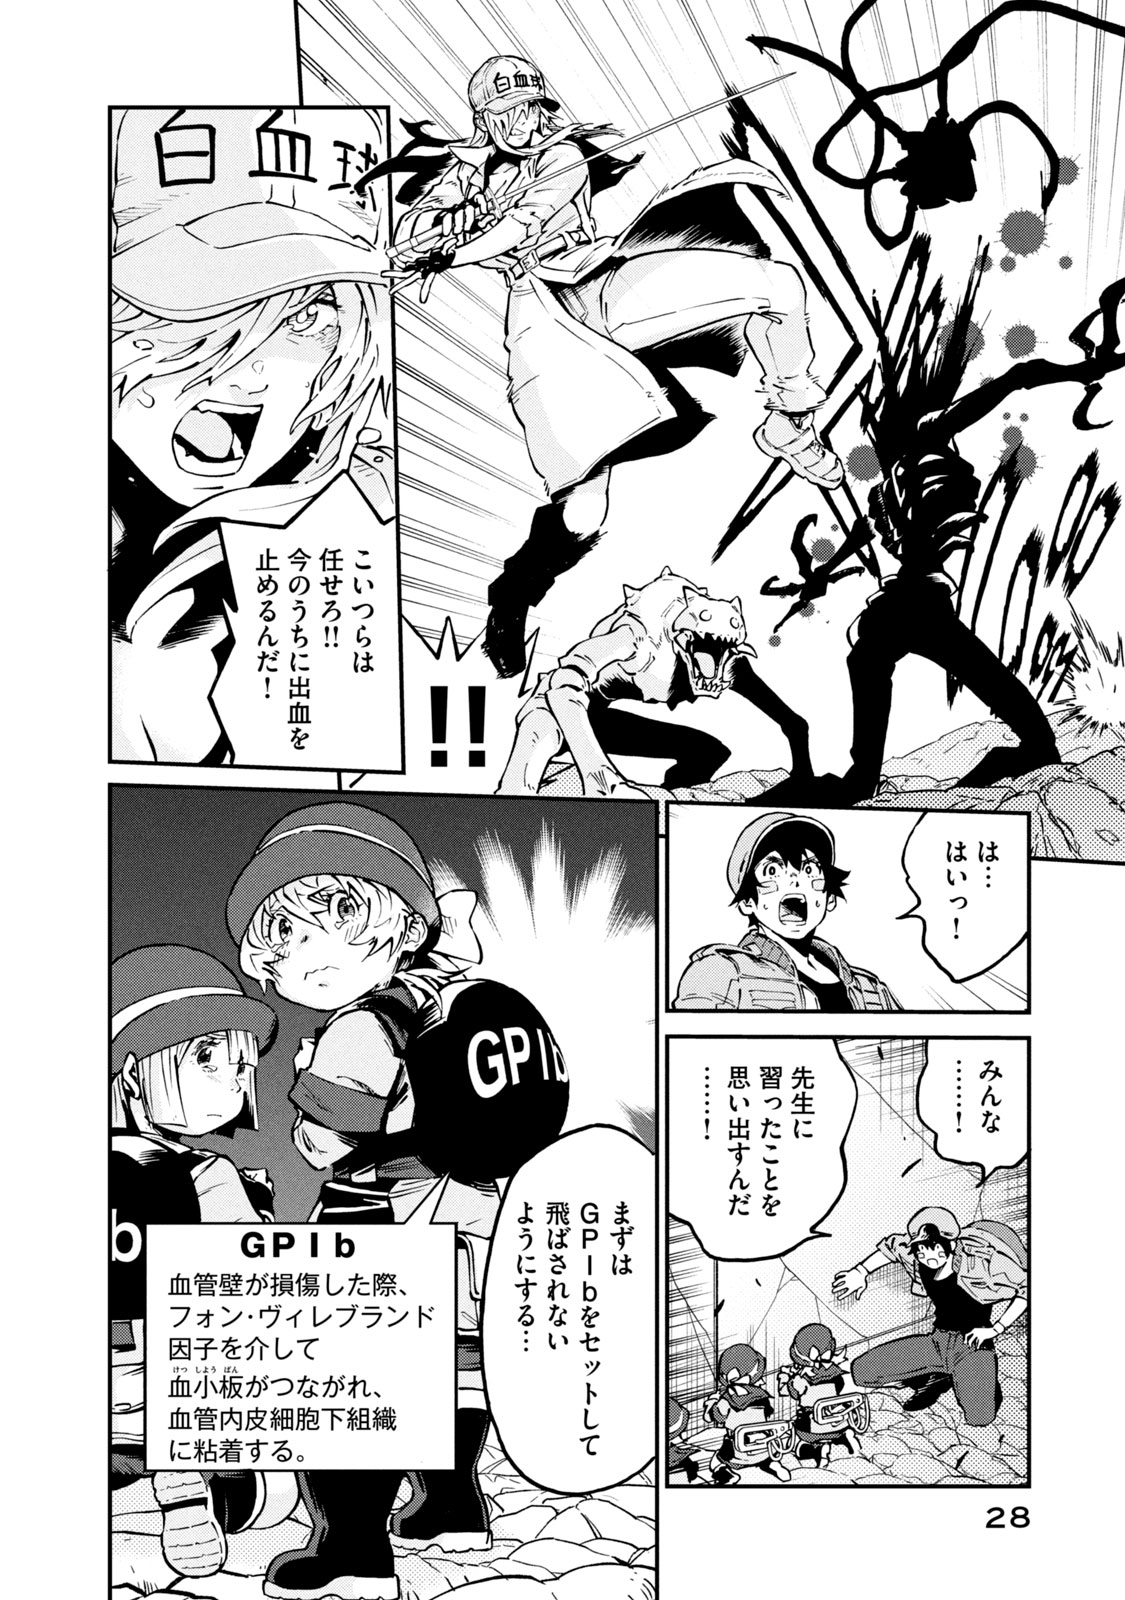 Hataraku Saibou BLACK - Chapter 43 - Page 4